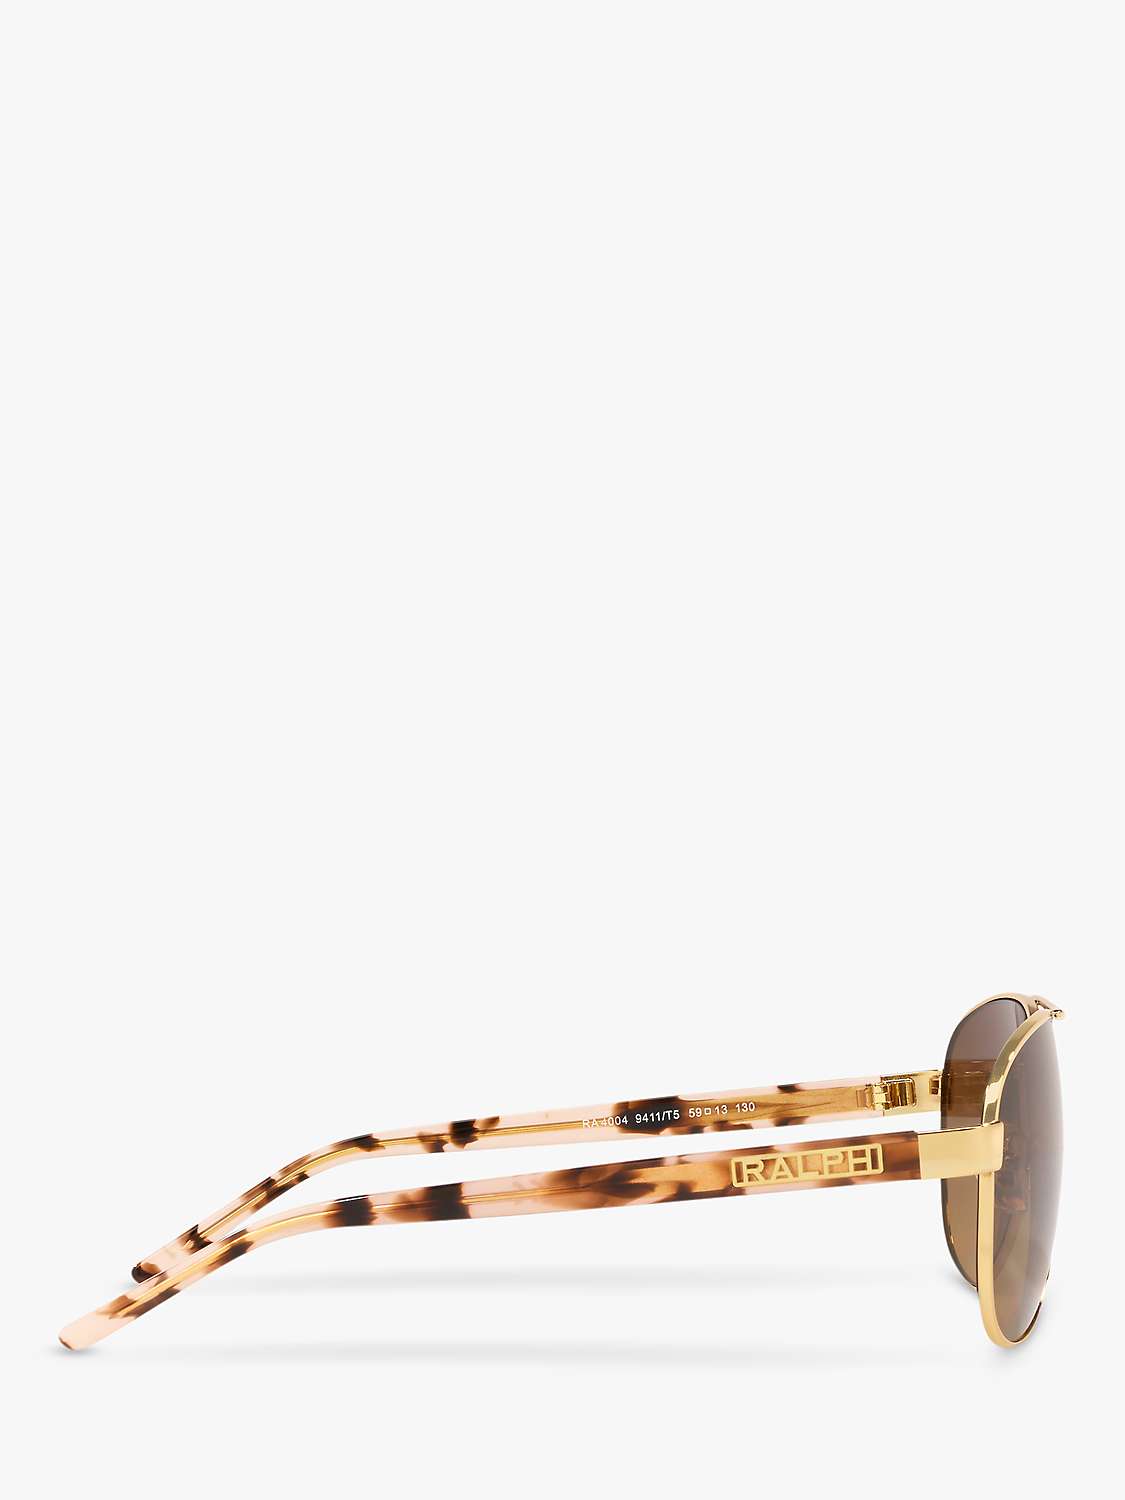 Buy Ralph Lauren RA4004 Women's Aviator Sunglasses, Gold/Brown Online at johnlewis.com